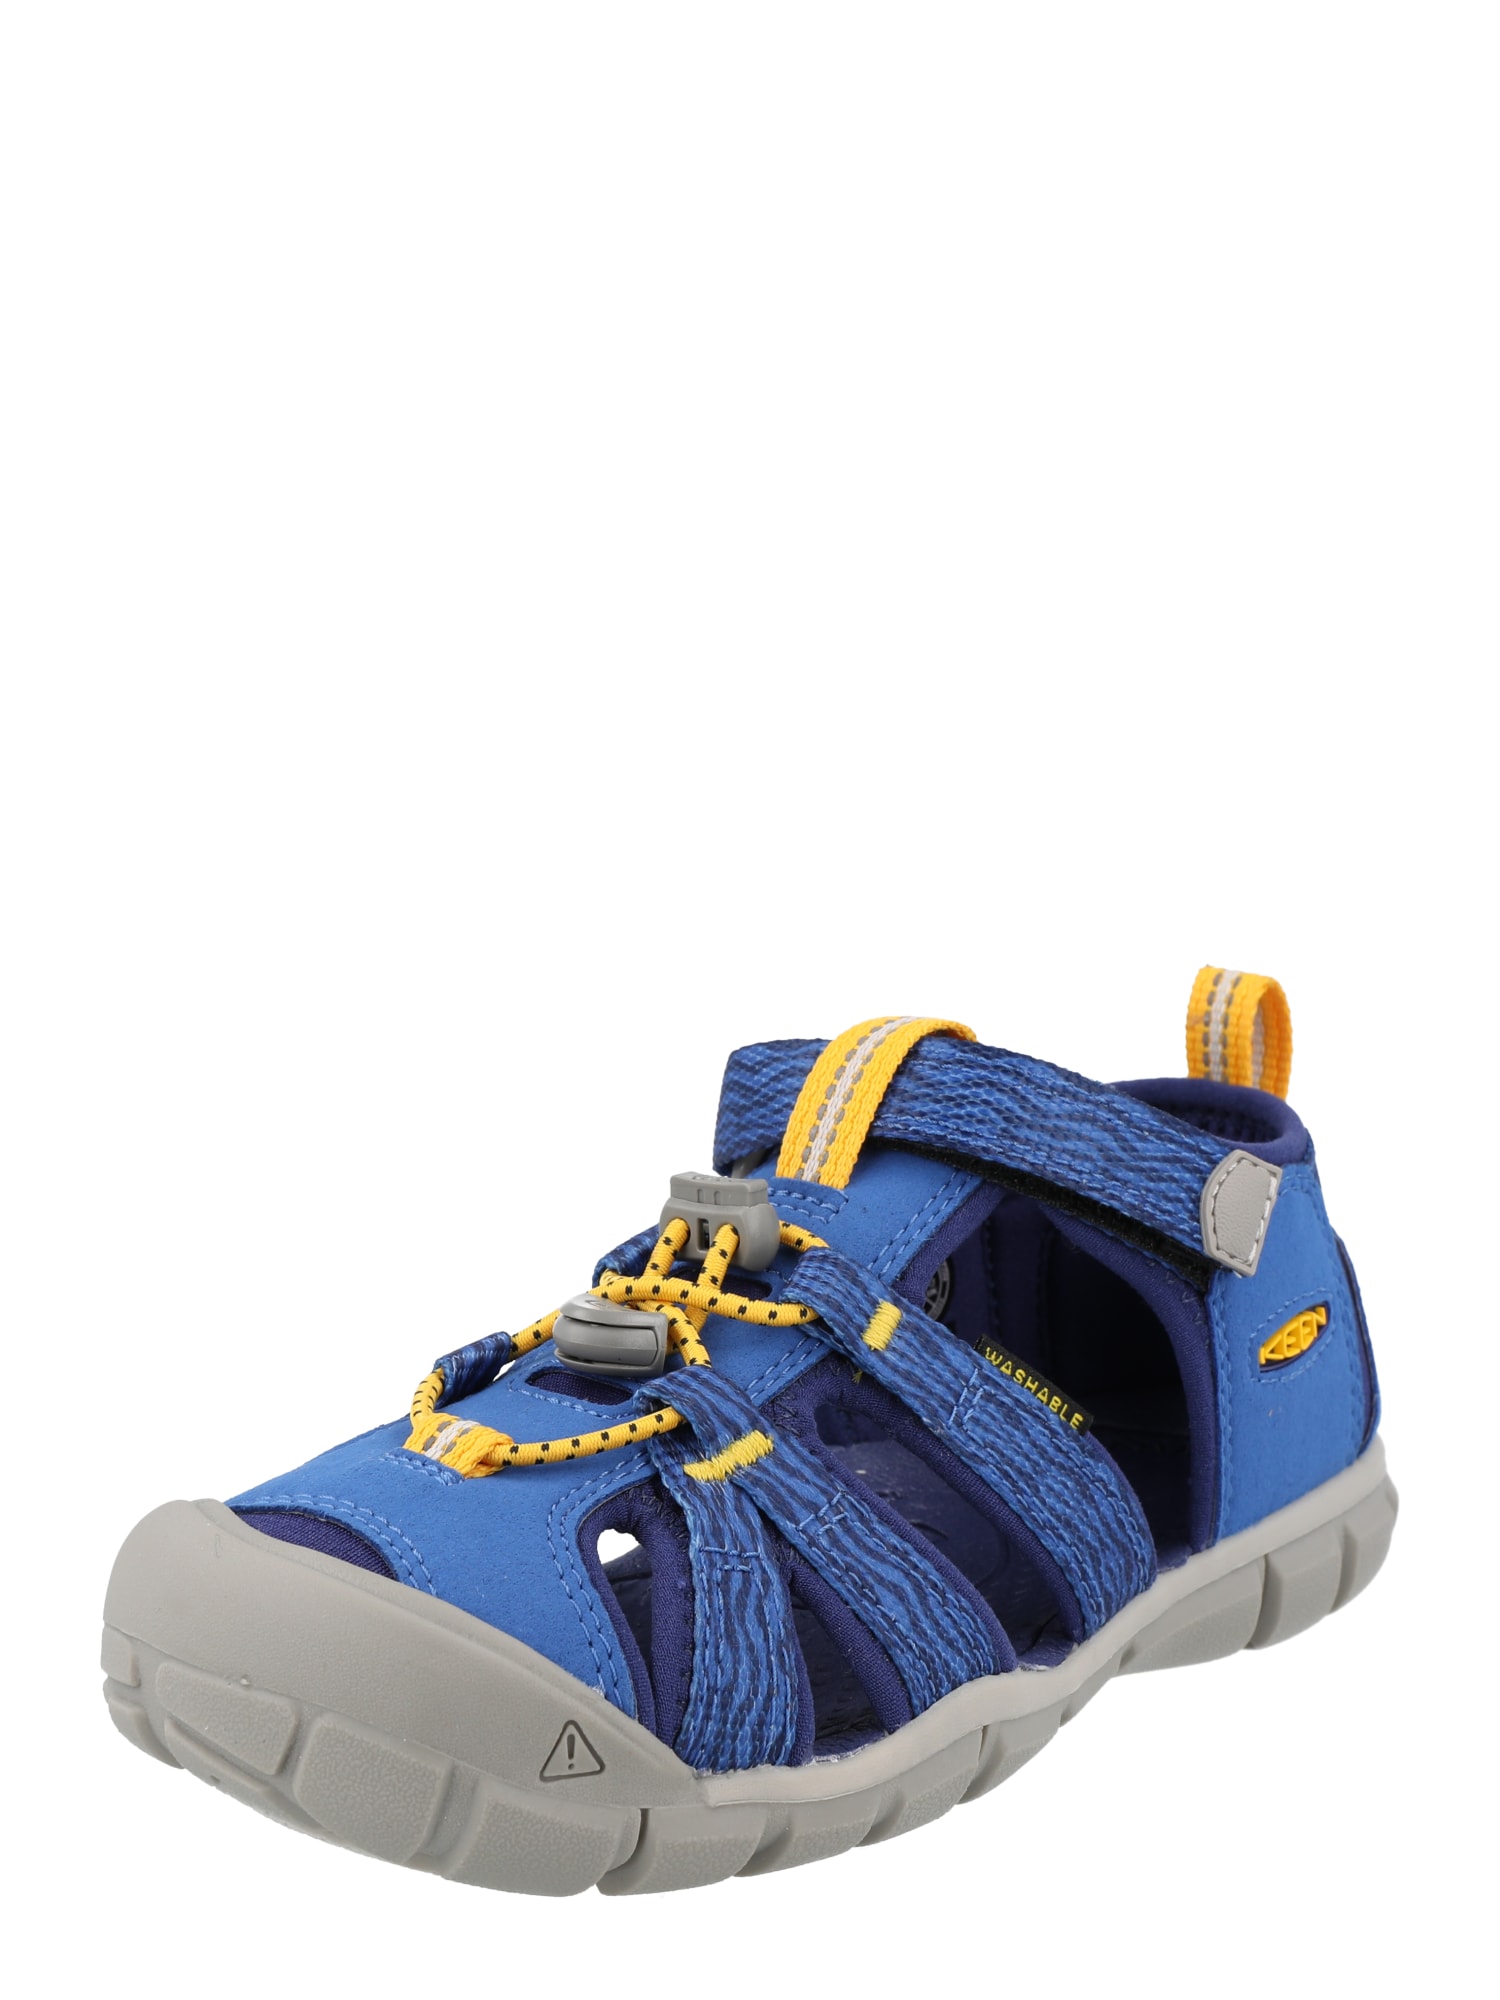 KEEN Atviri batai 'Seacamp' mėlyna / geltona / tamsiai mėlyna